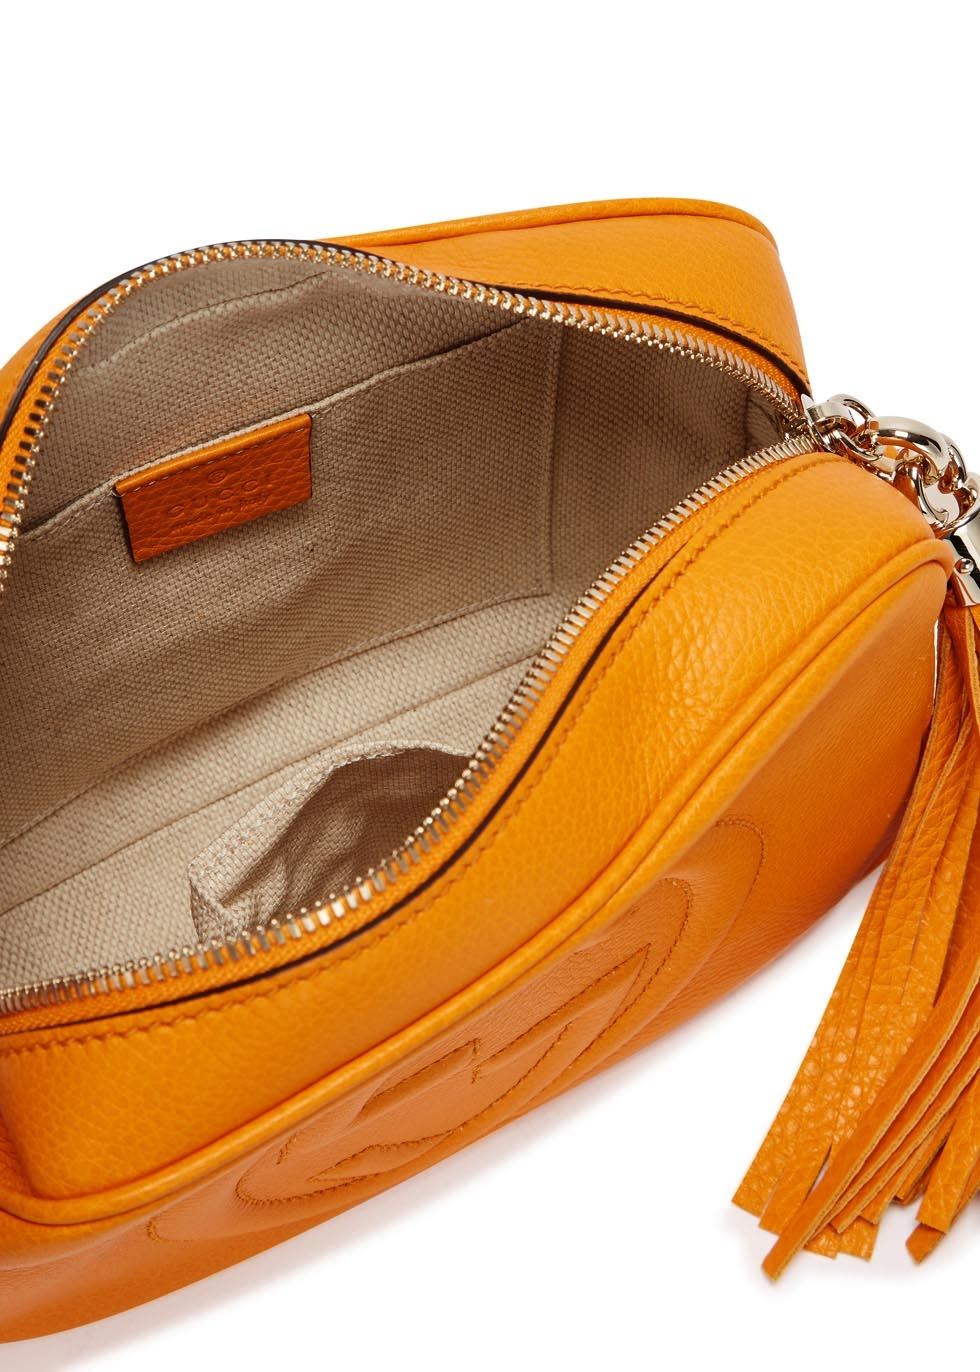 Gucci Soho Leather Cross-Body Bag in Orange - Lyst